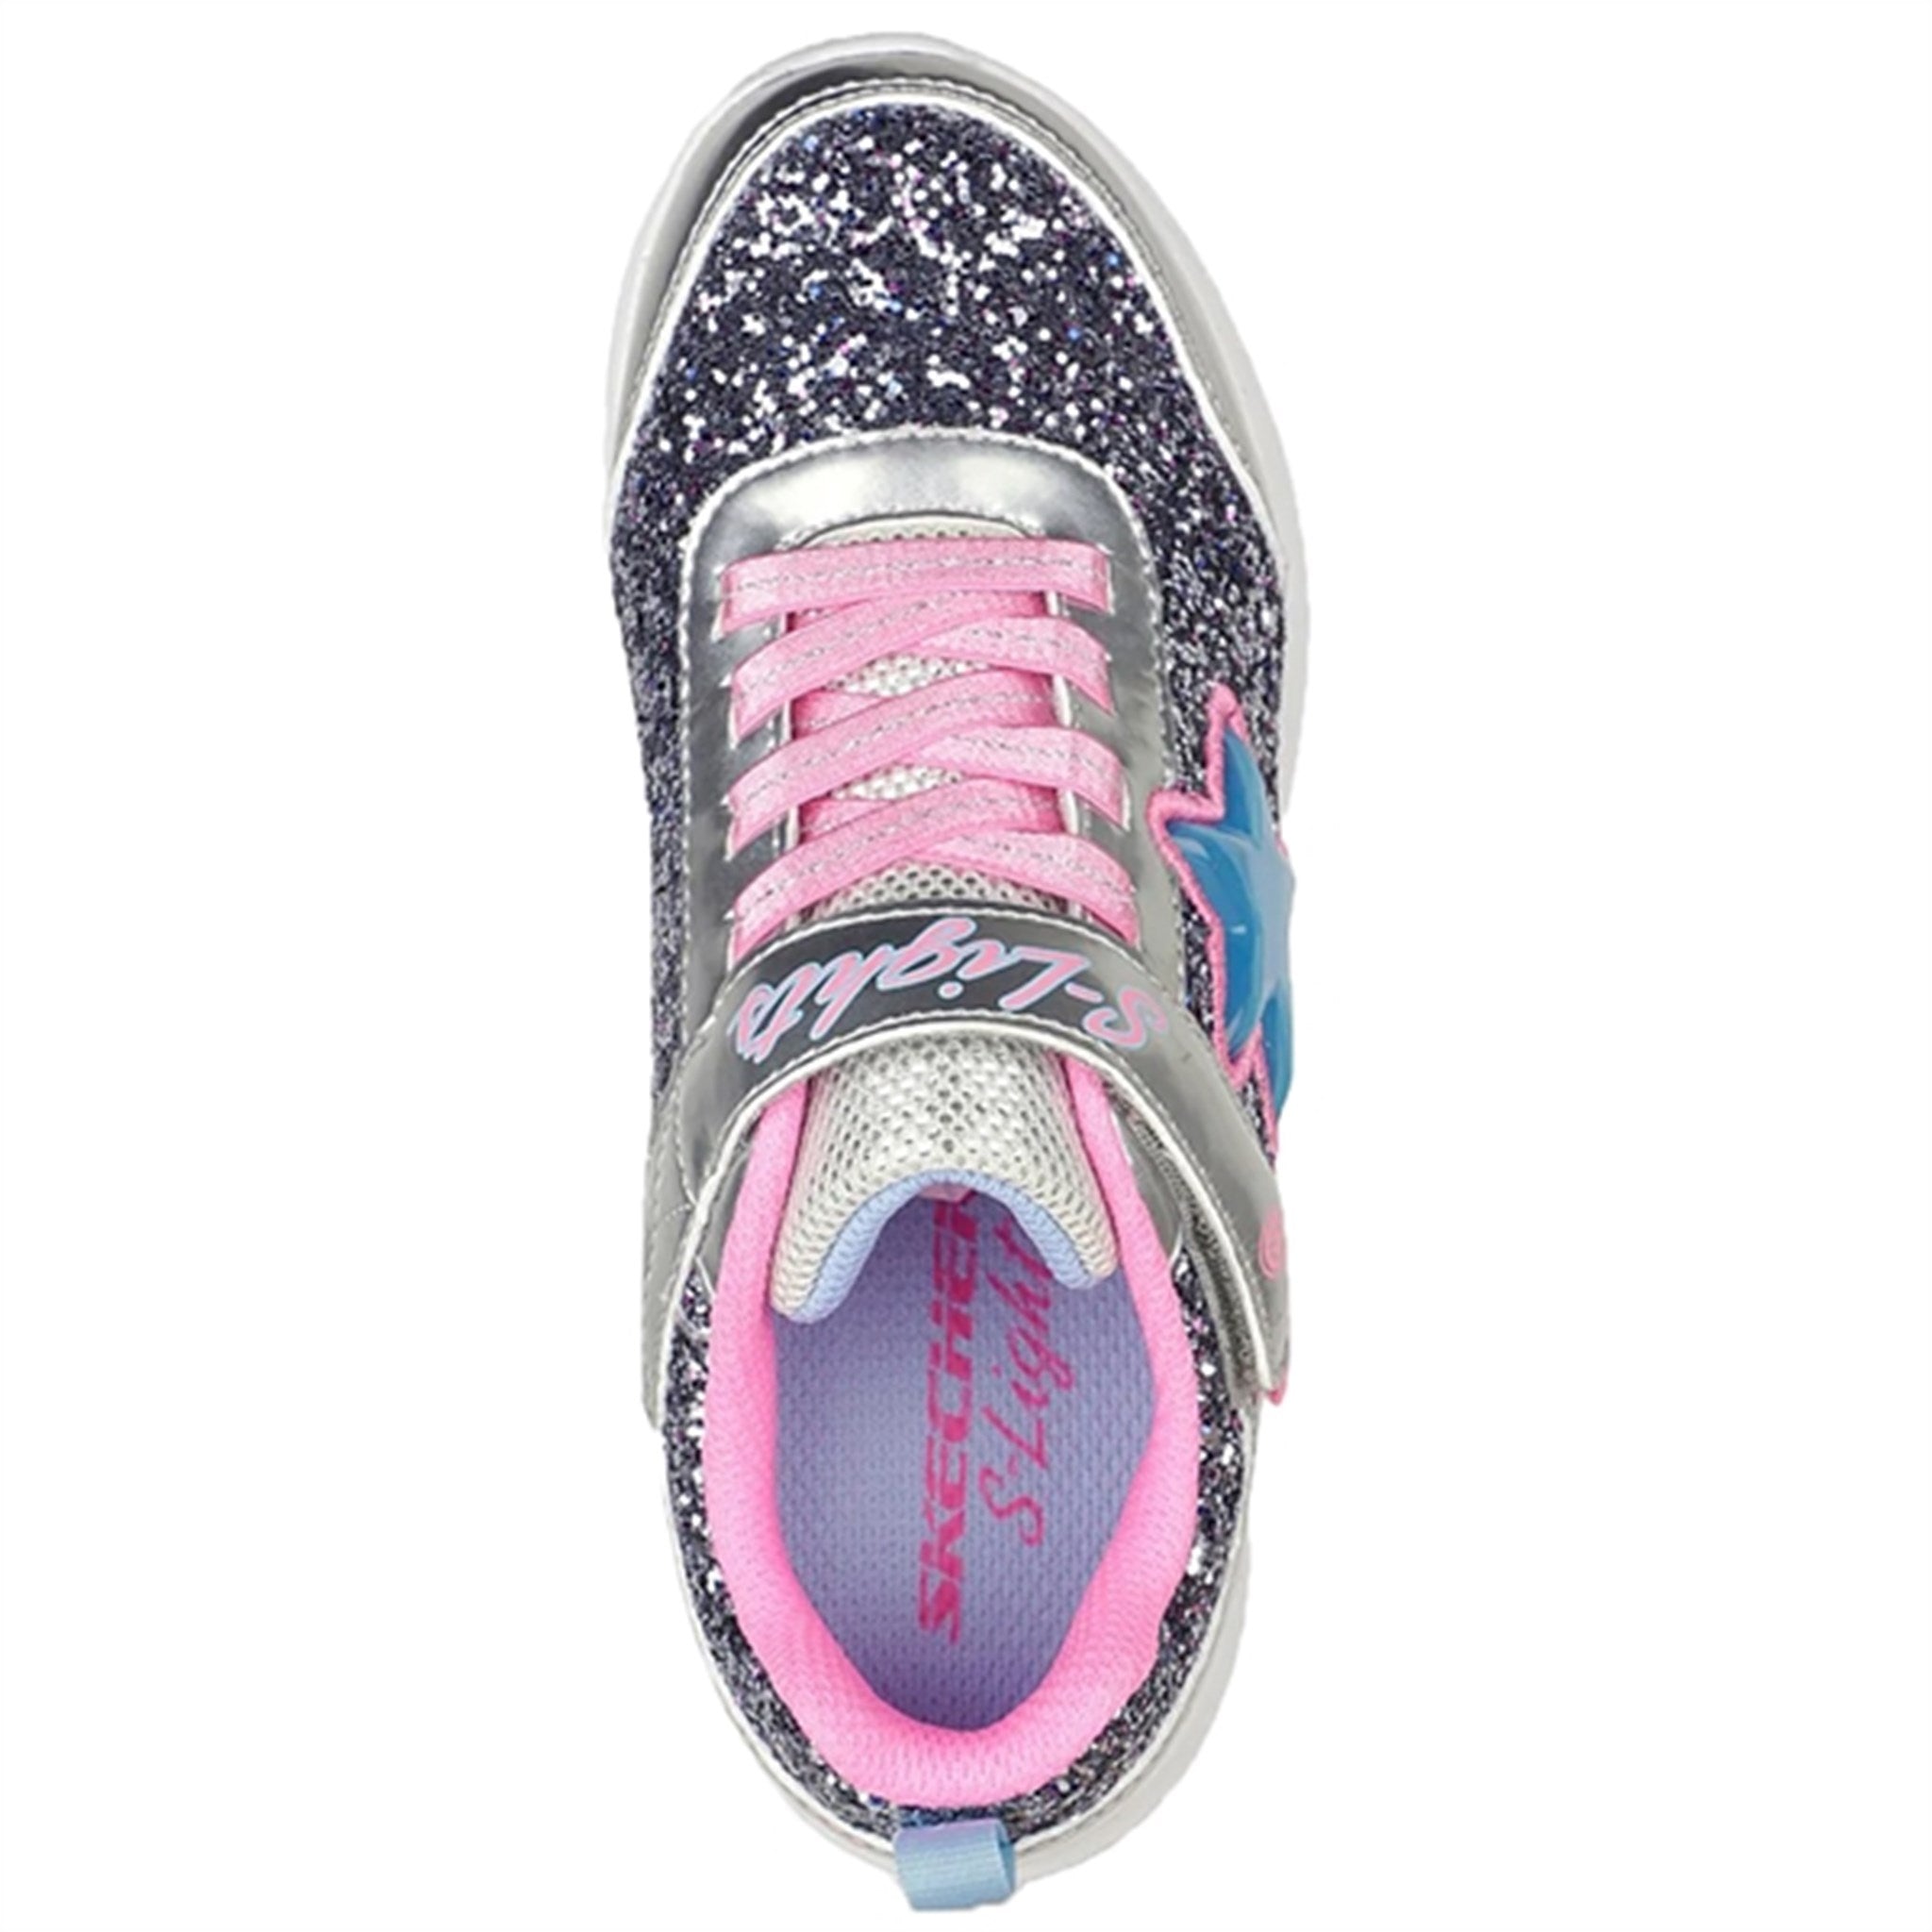 Skechers Glimmer Knicks Sneakers Starlet Shine Silver Pink 2